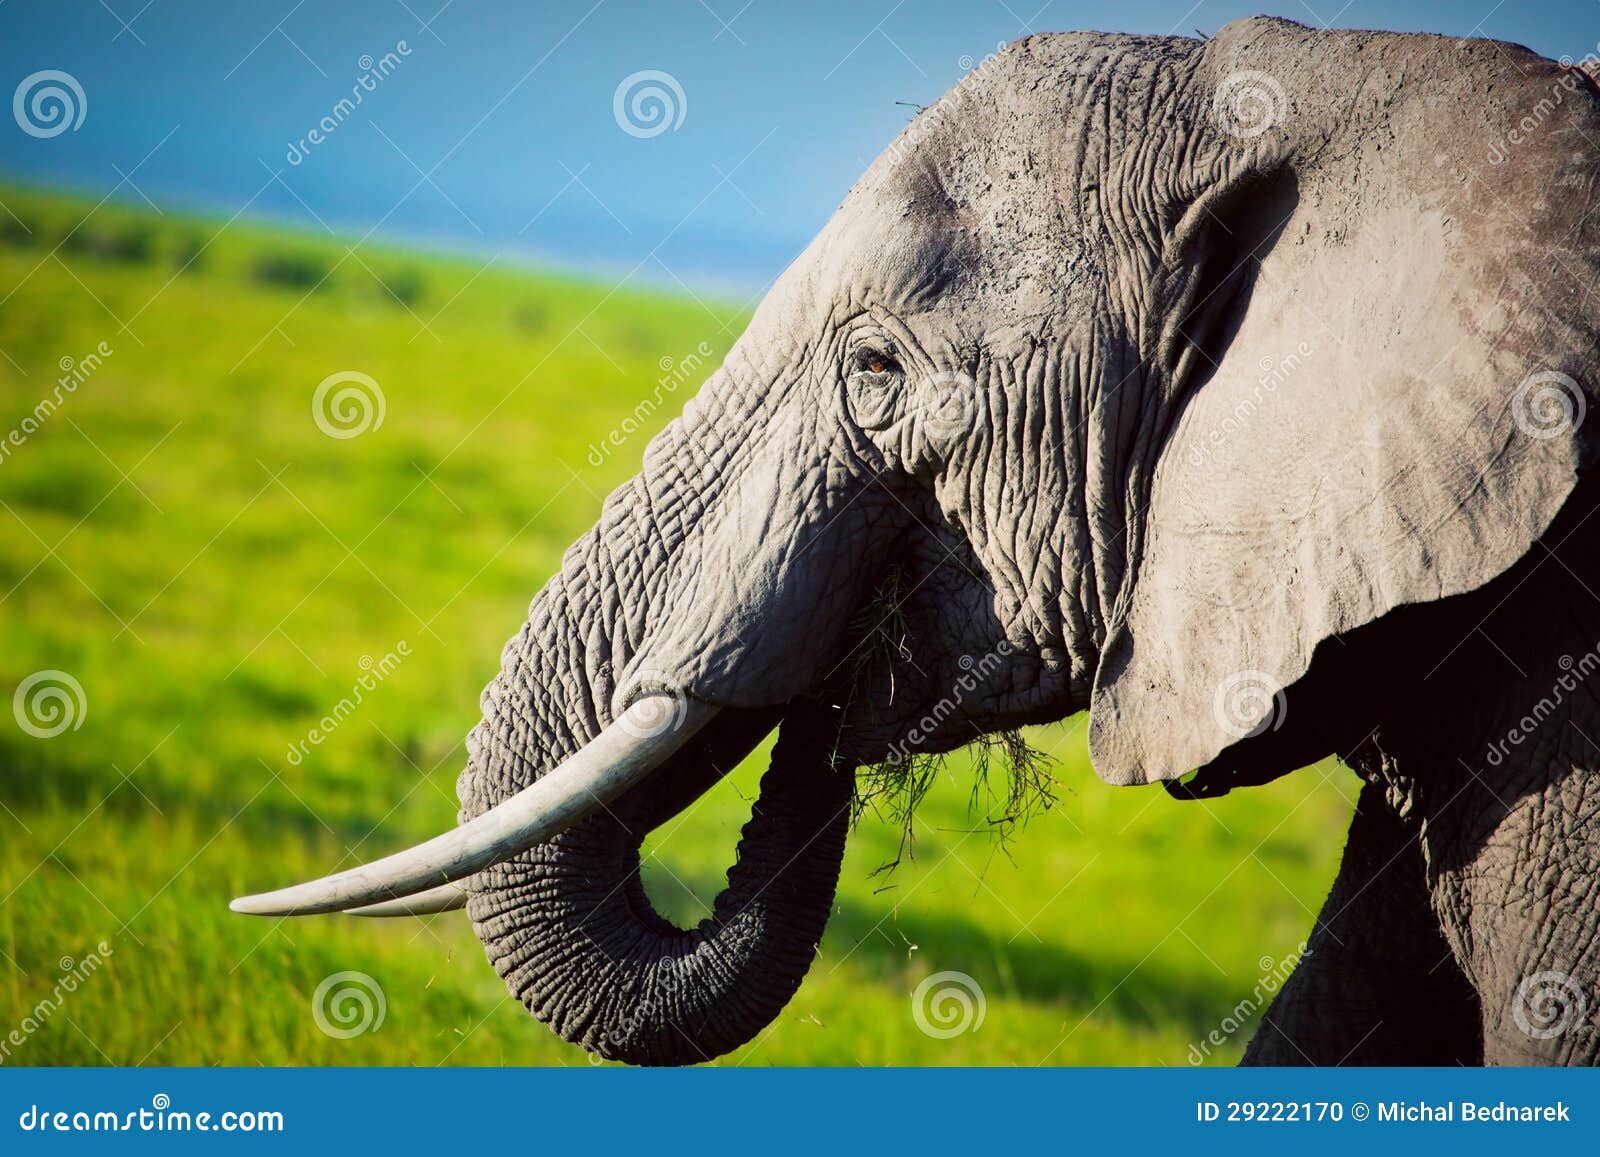 elephant on savanna. safari in amboseli, kenya, africa